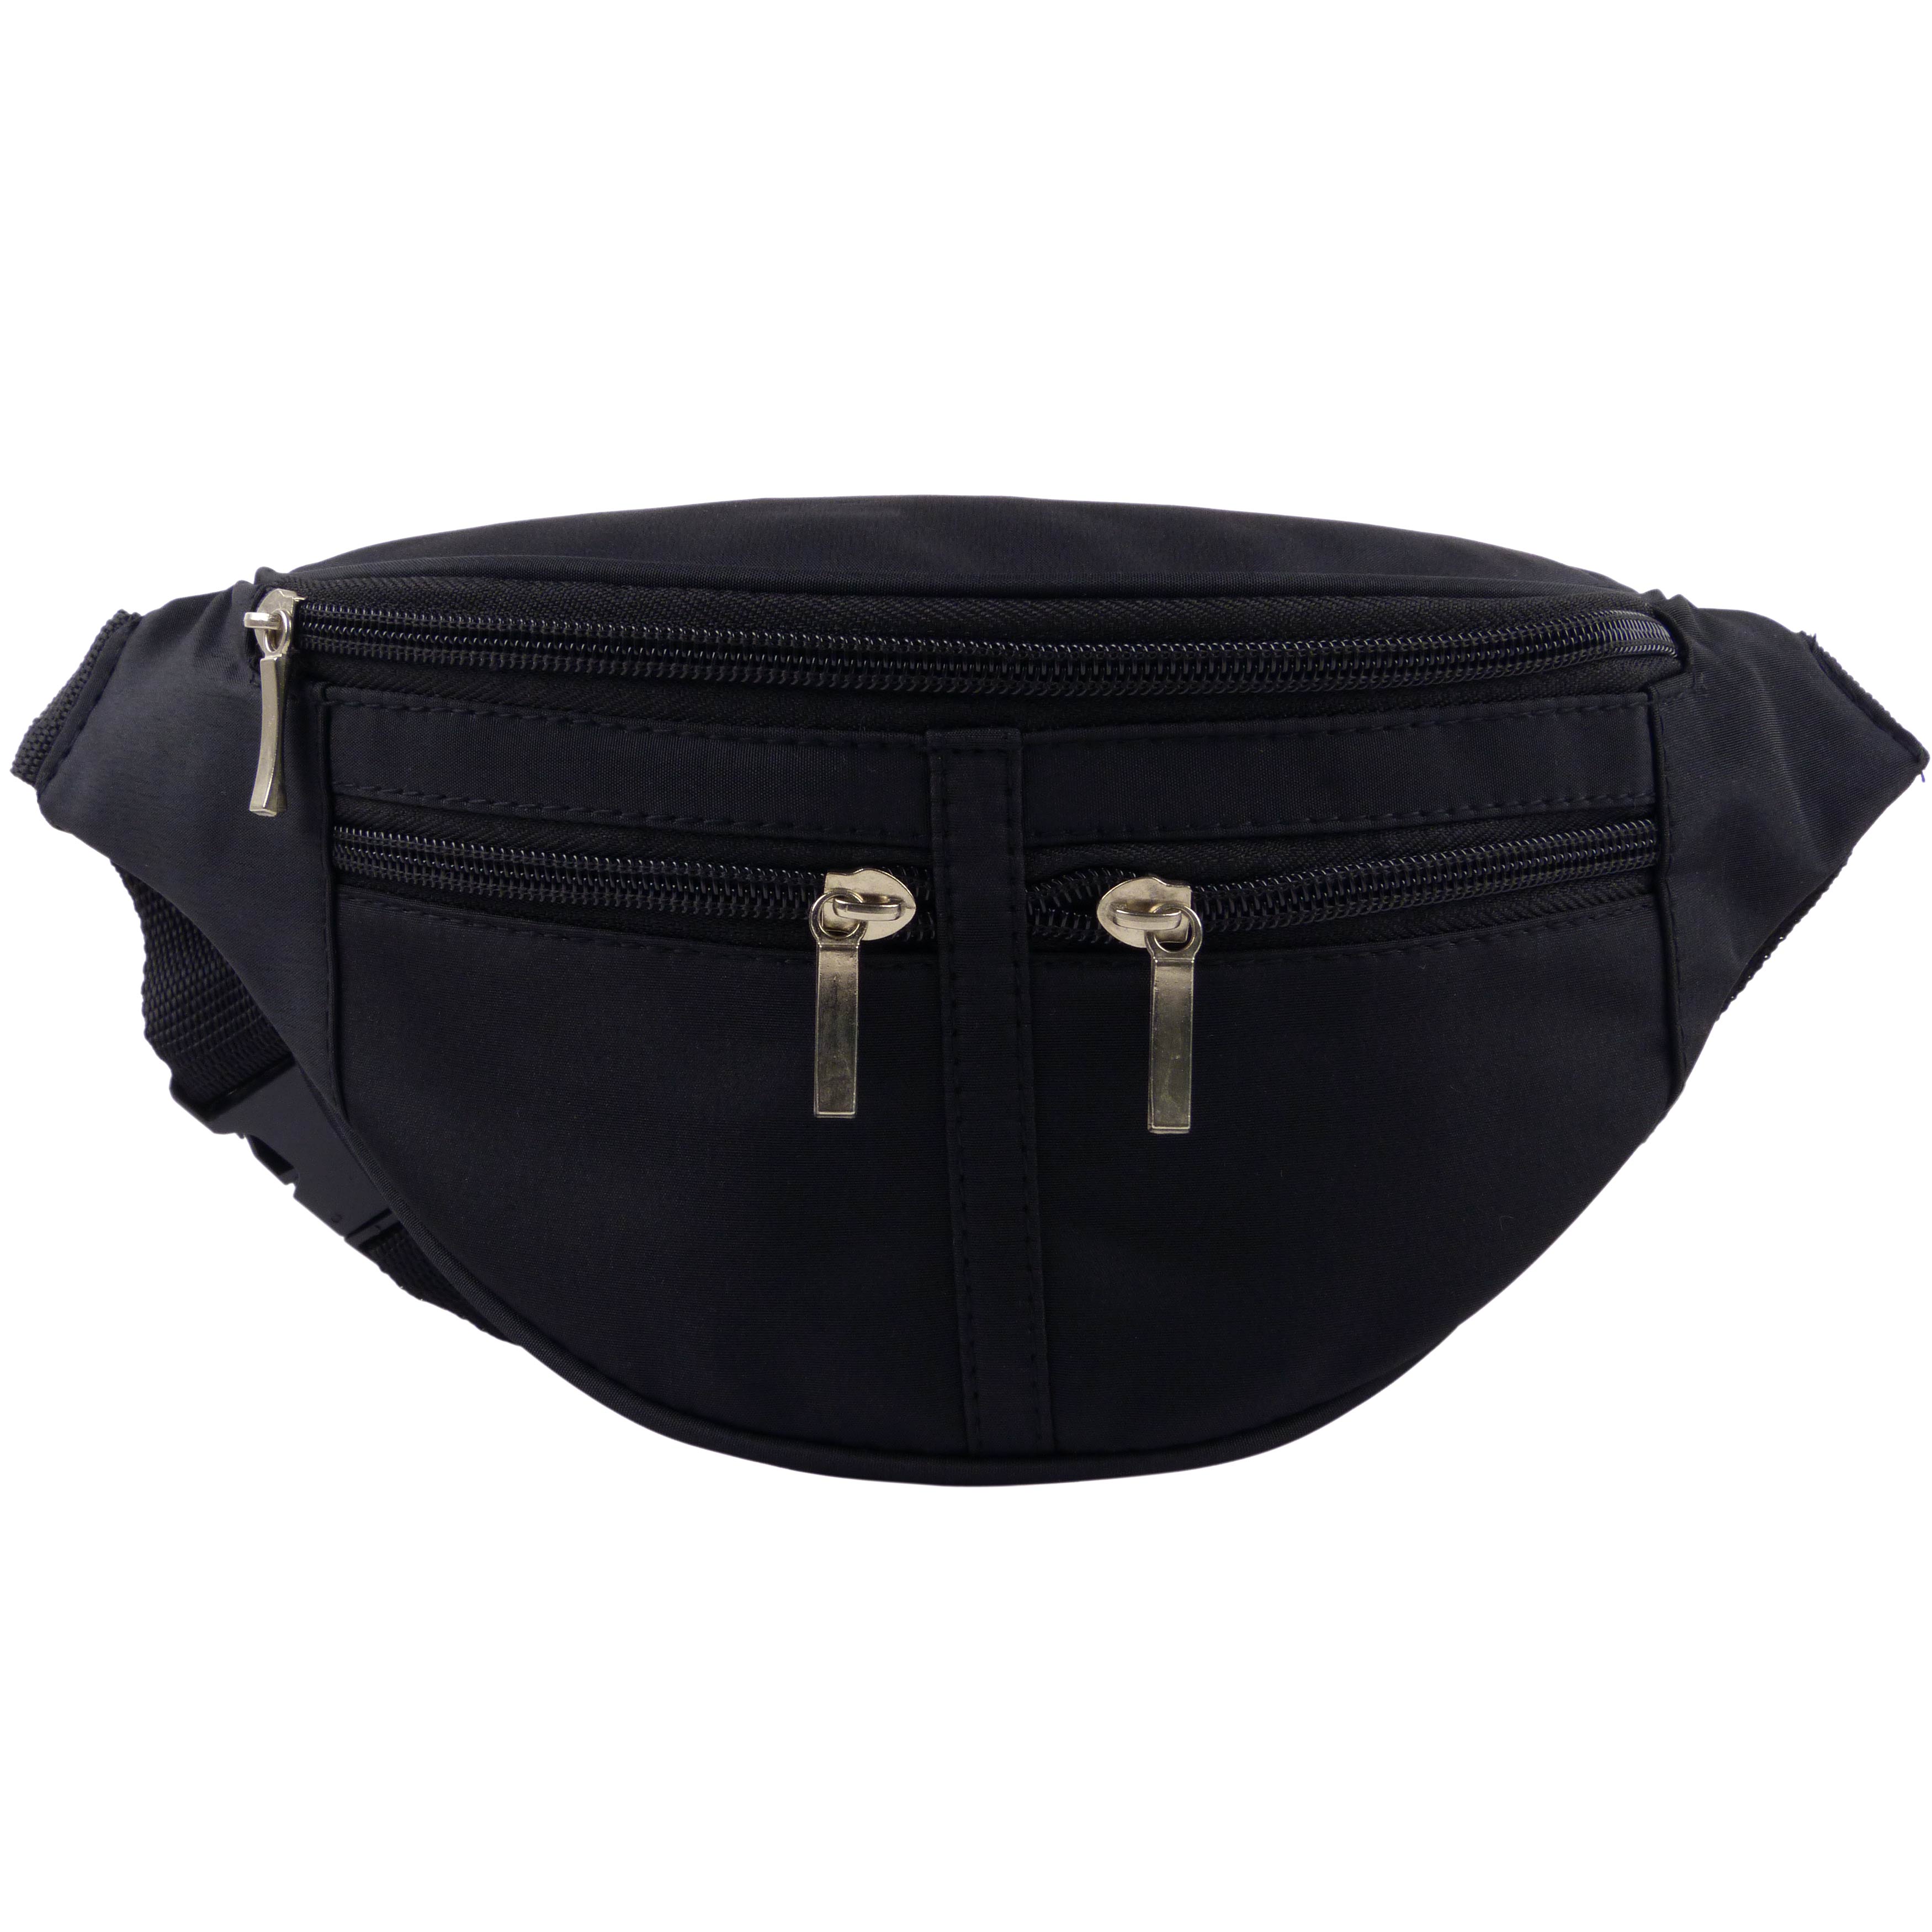 Black Bum Bag 4 zips Microfibre Unisex Fanny Pack Mens Ladies | eBay